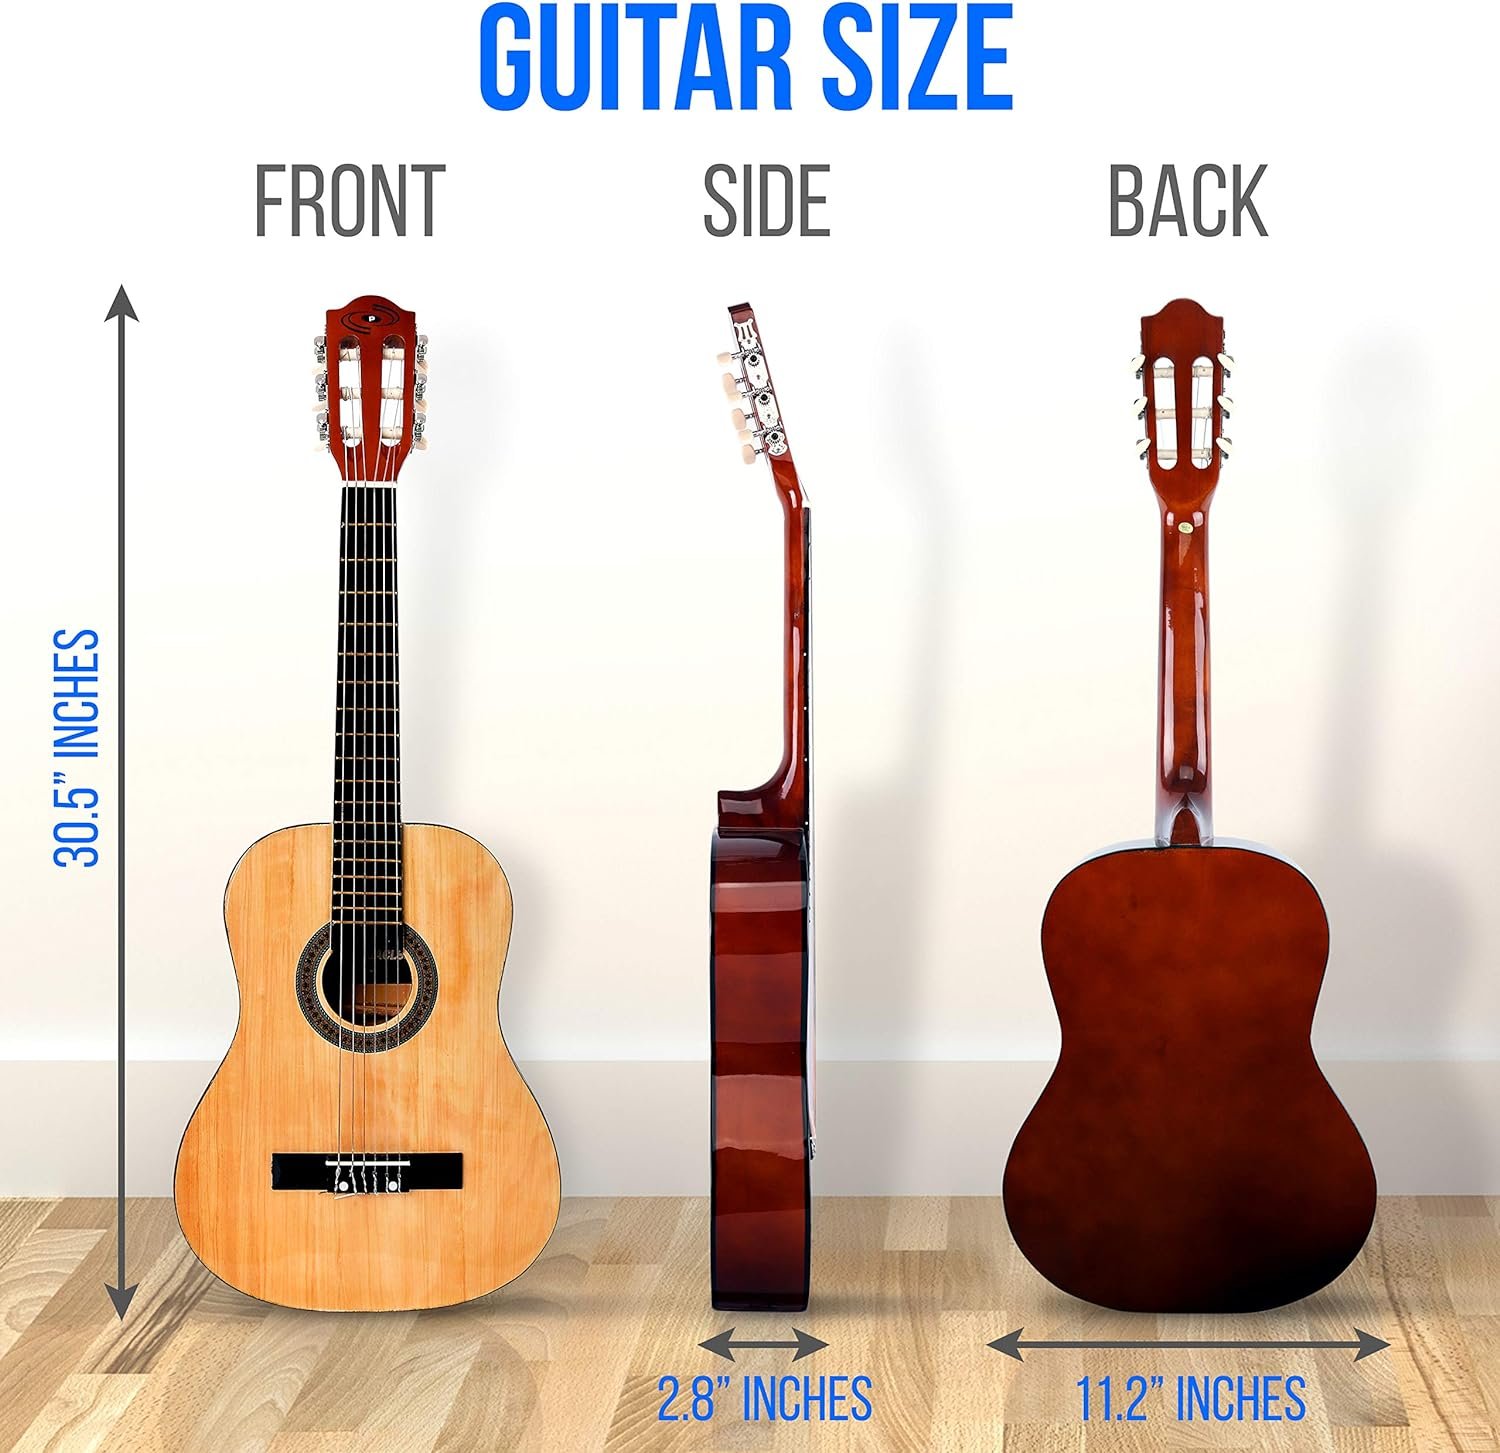 Pyle Beginner Acoustic Guitar Kit, 3/4 Junior Size All Wood Instrument for Kids, Adults, 36 Natural Ash